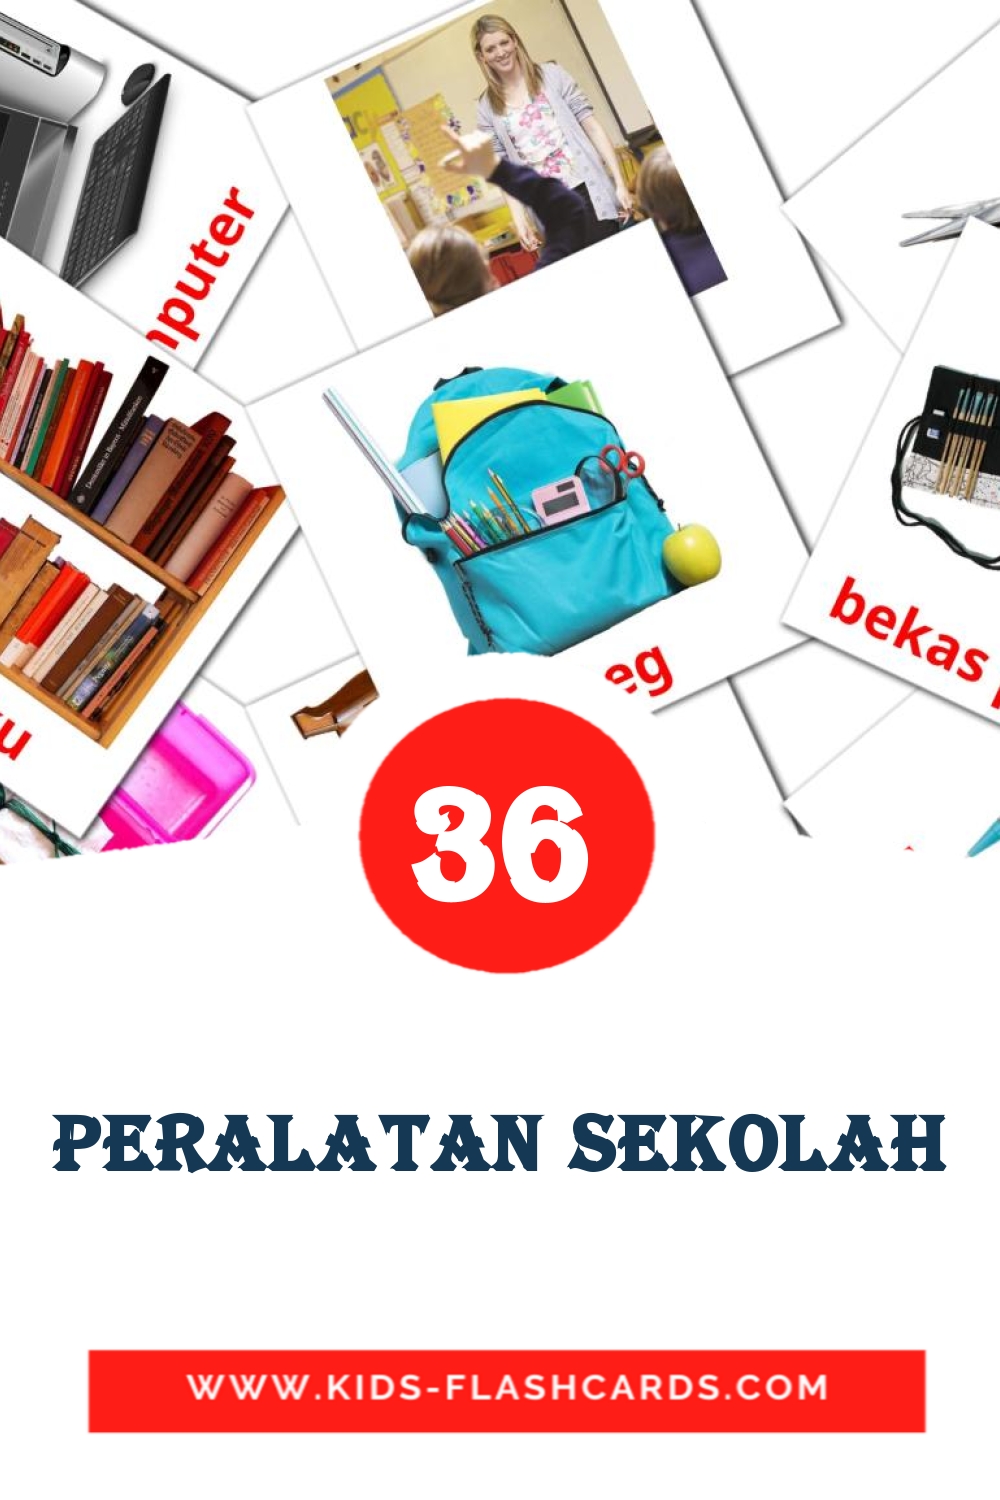 36 Peralatan Sekolah Picture Cards for Kindergarden in malay